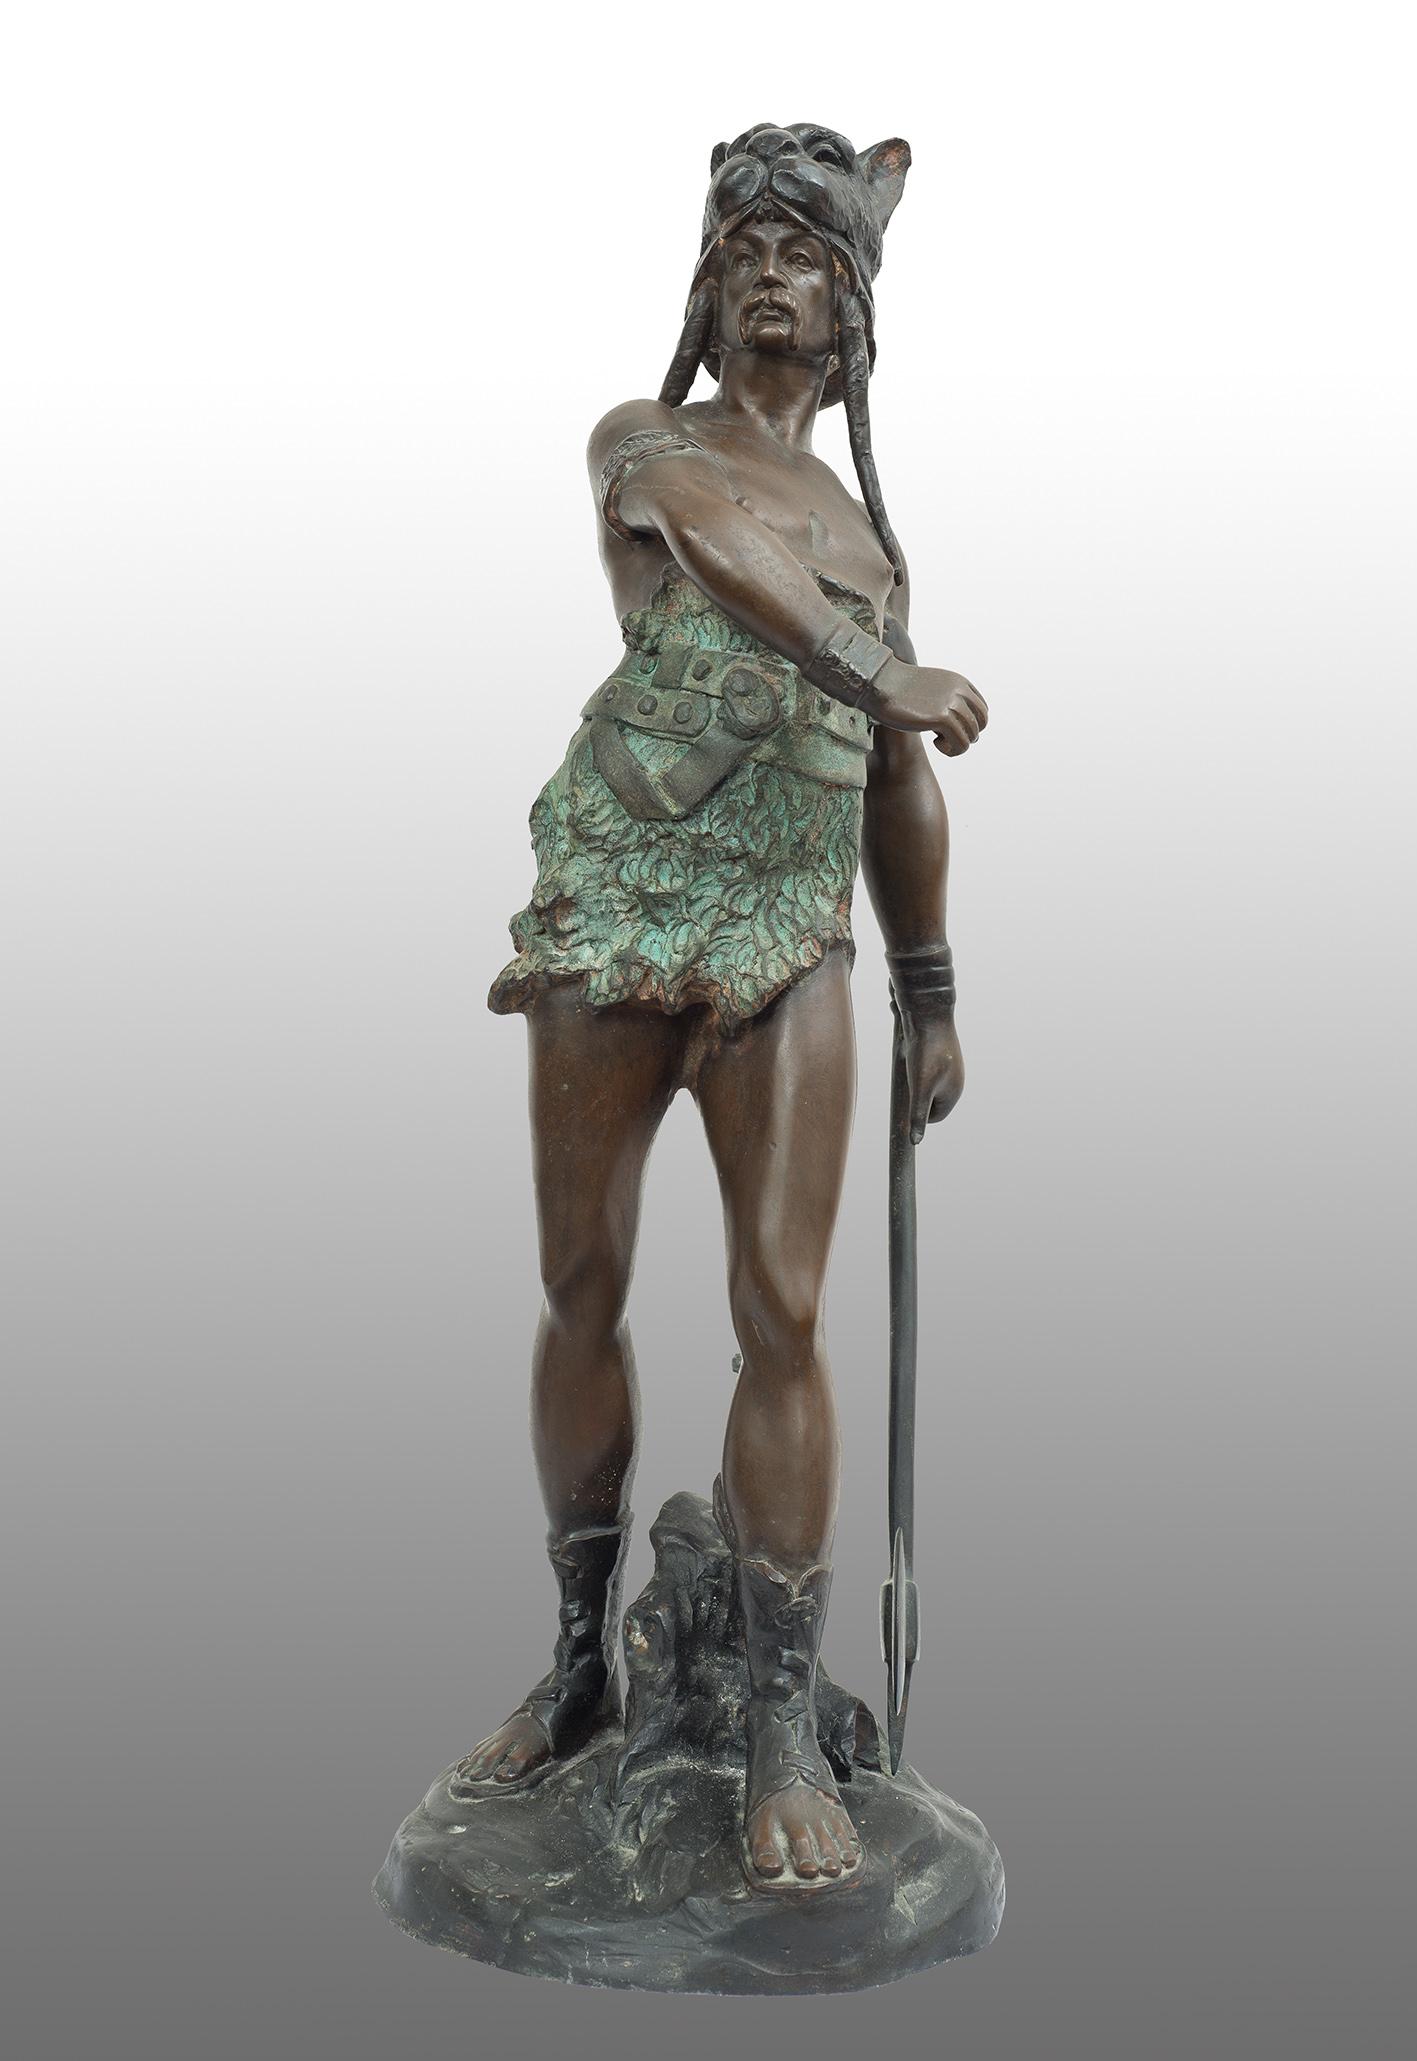 Unknown Figurative Sculpture - Antique patinated bronze sculpture depicting "Vercingetorix."